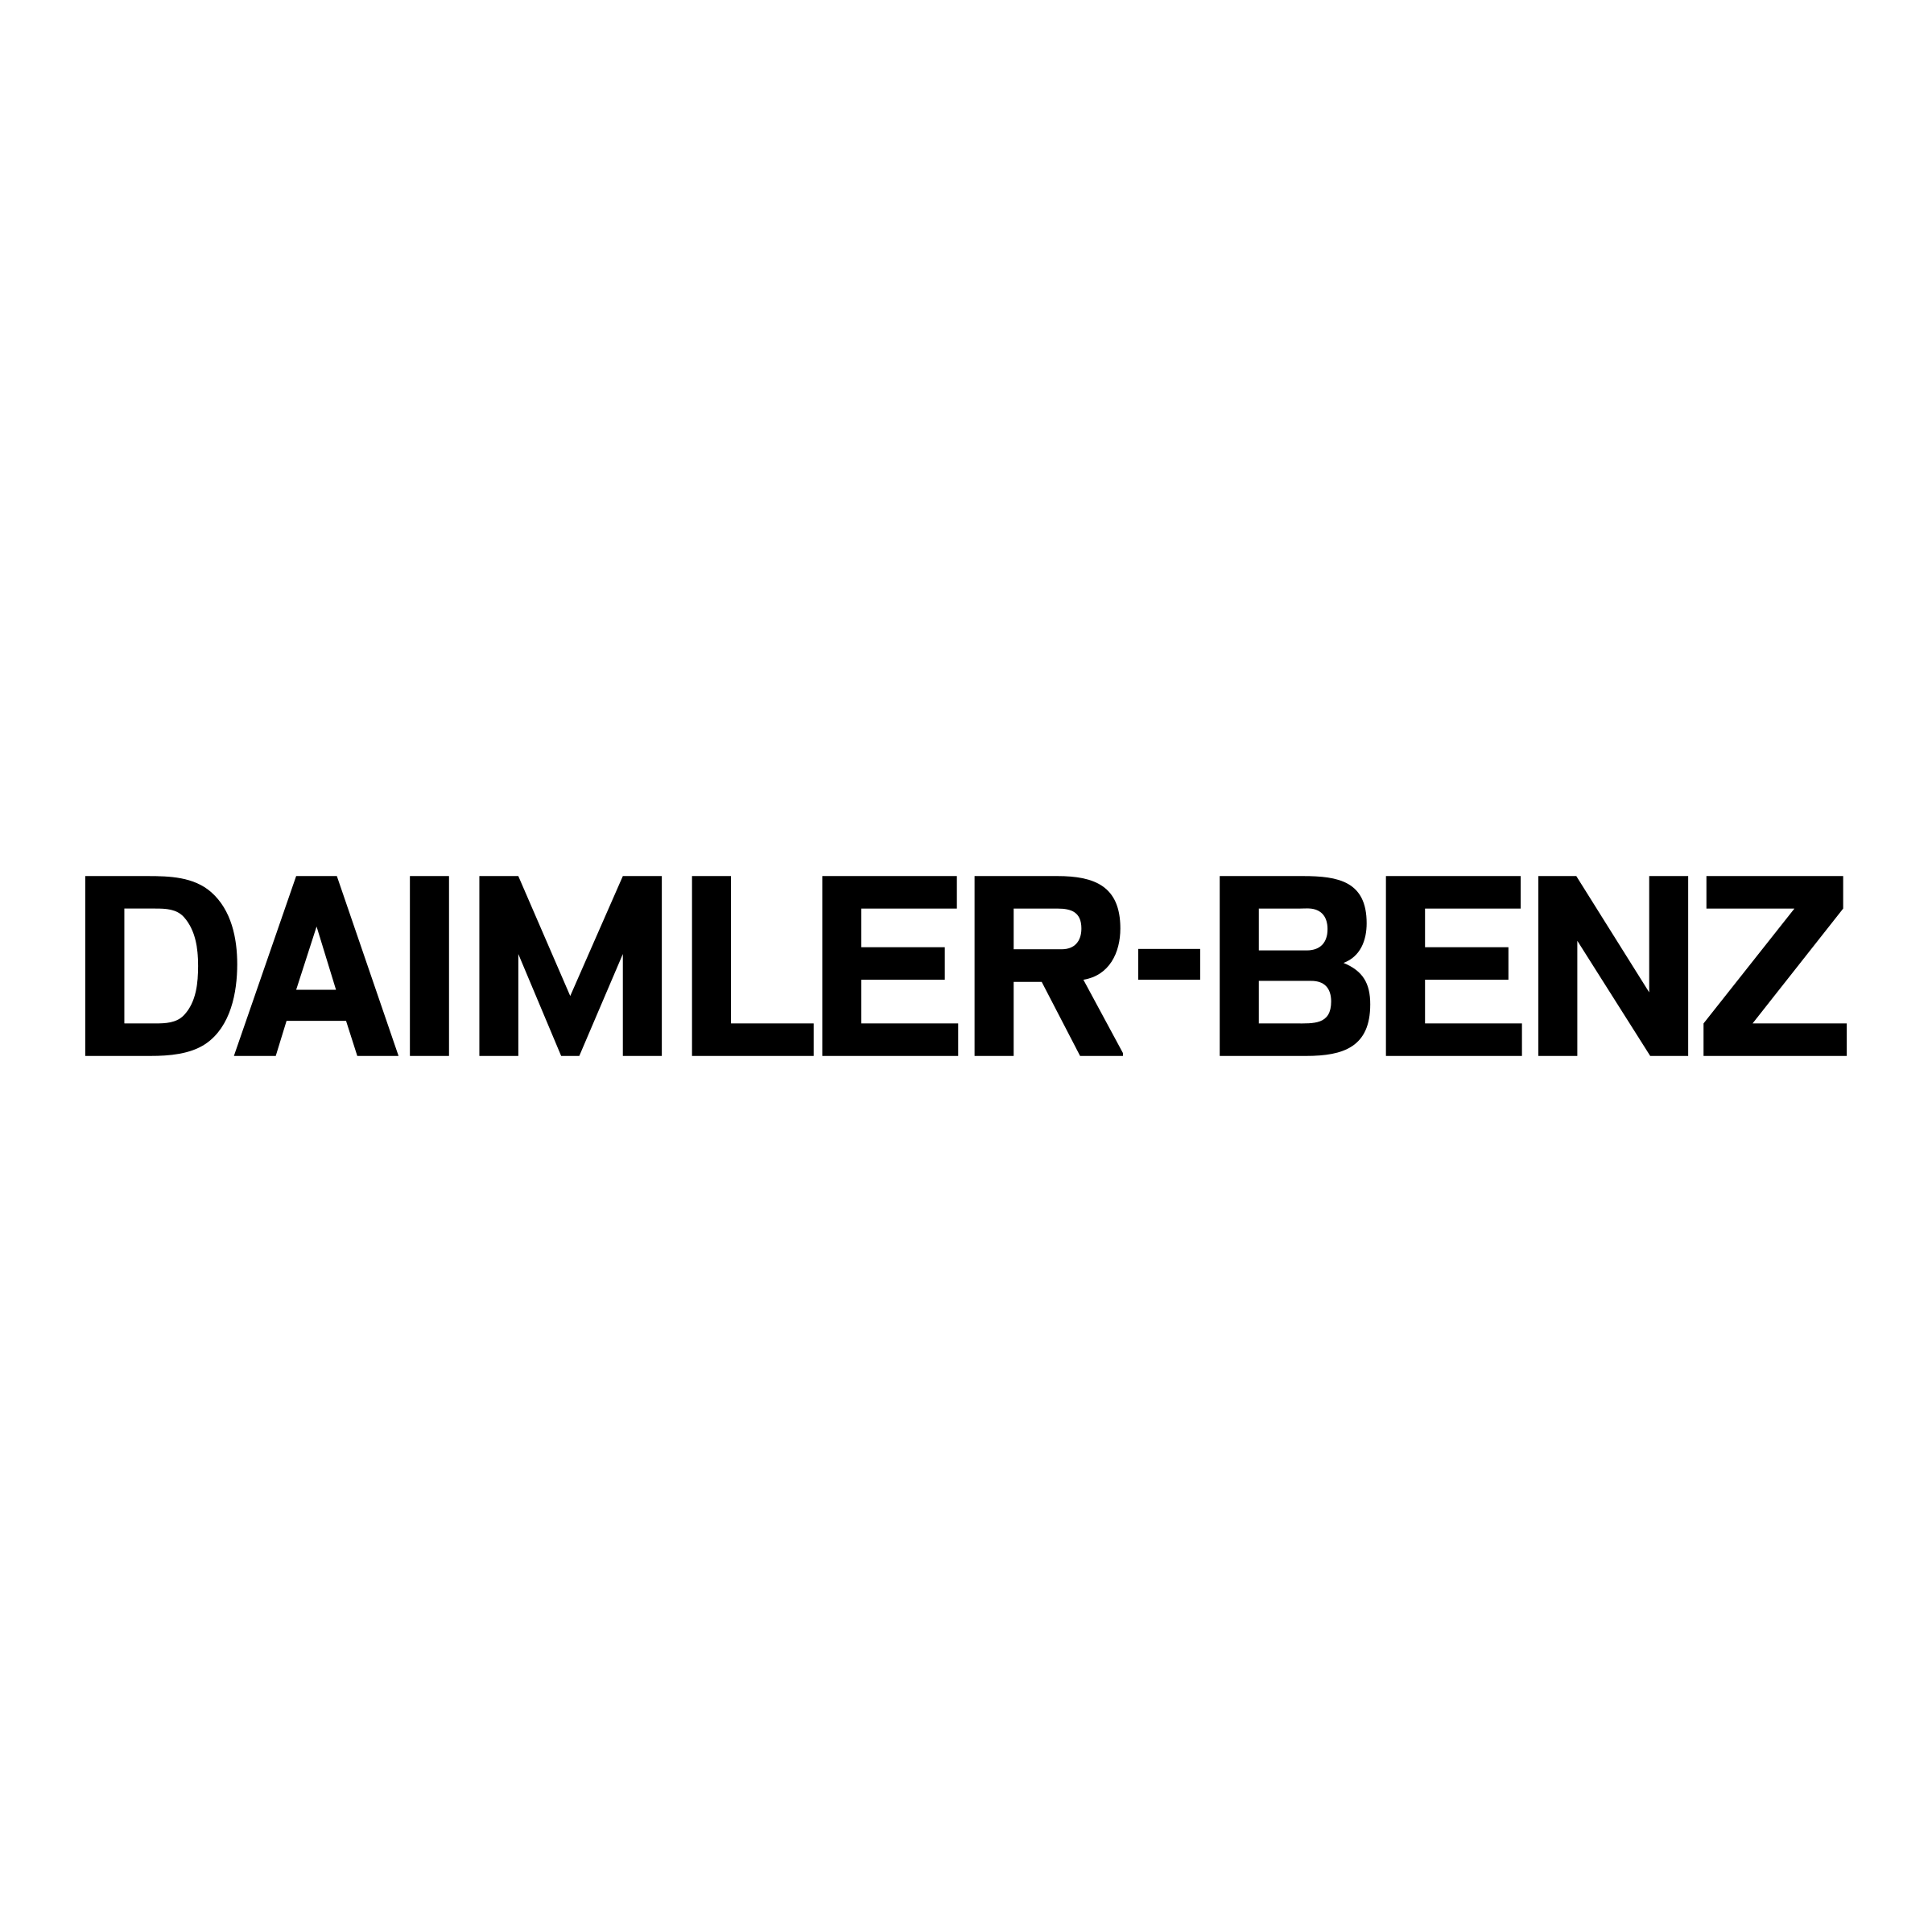 Daimler AG Logo - Daimler Benz Logo PNG Transparent & SVG Vector - Freebie Supply